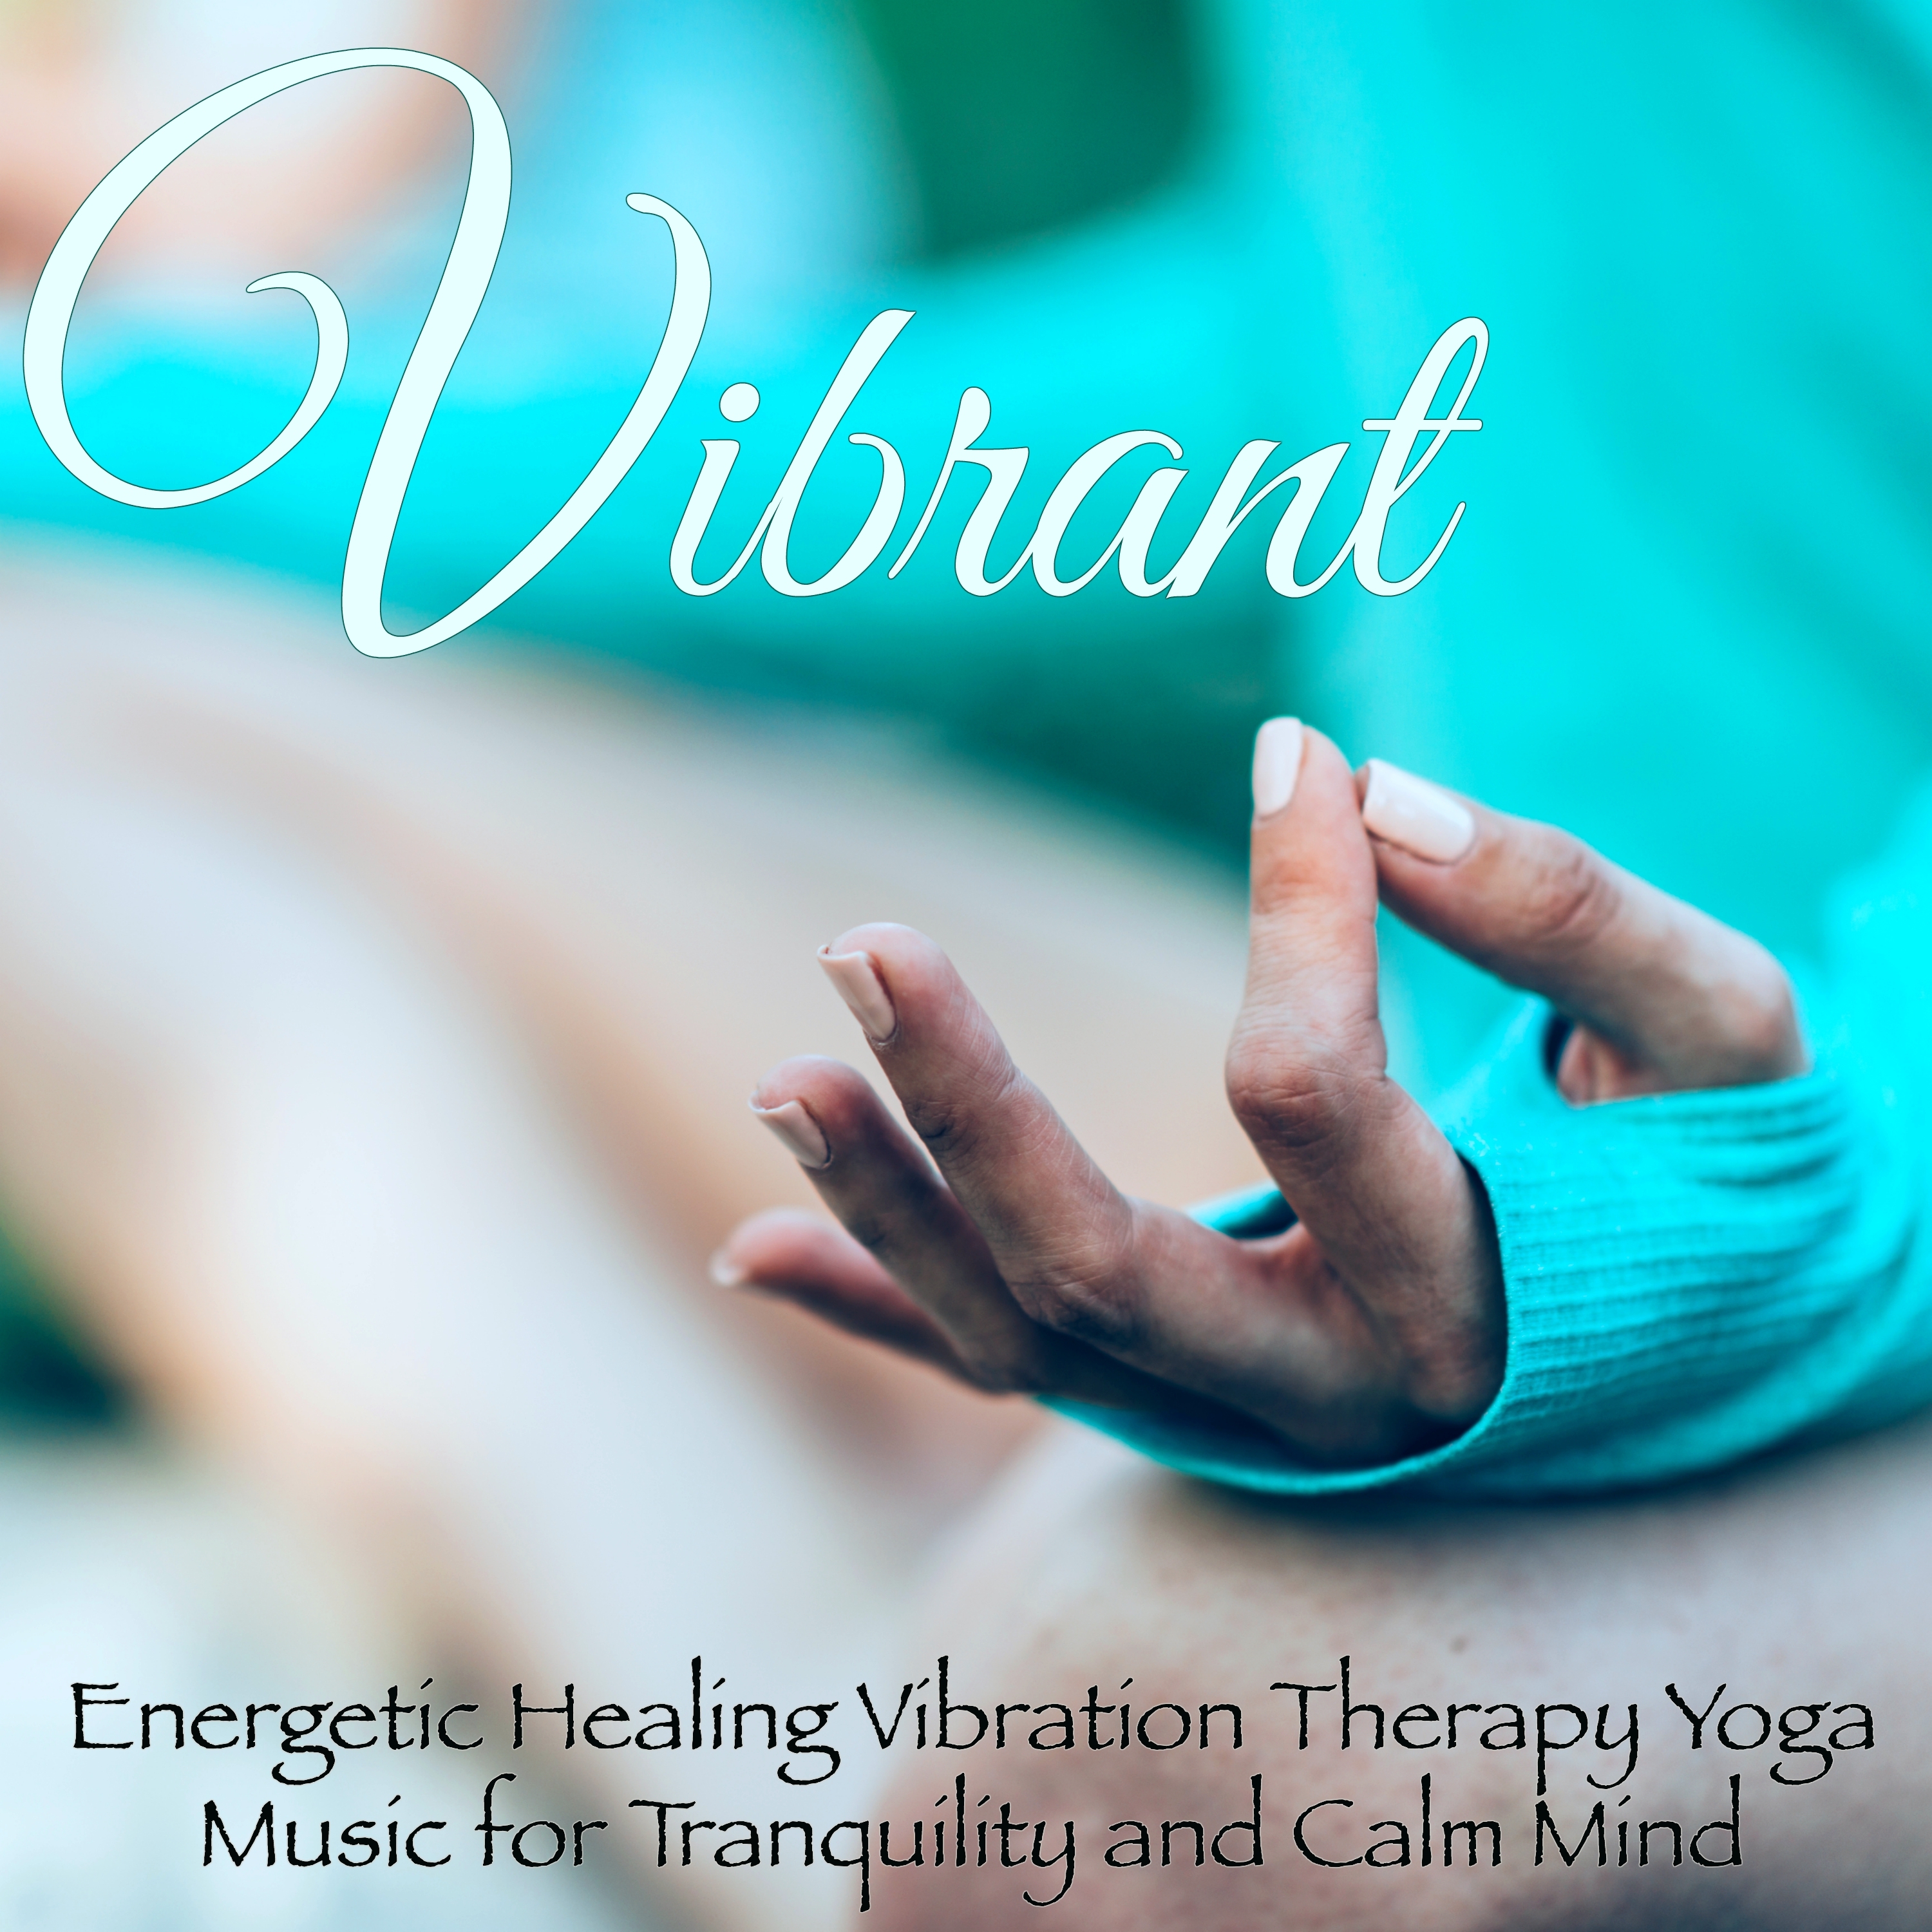 Morning Meditation - Vibration Therapy